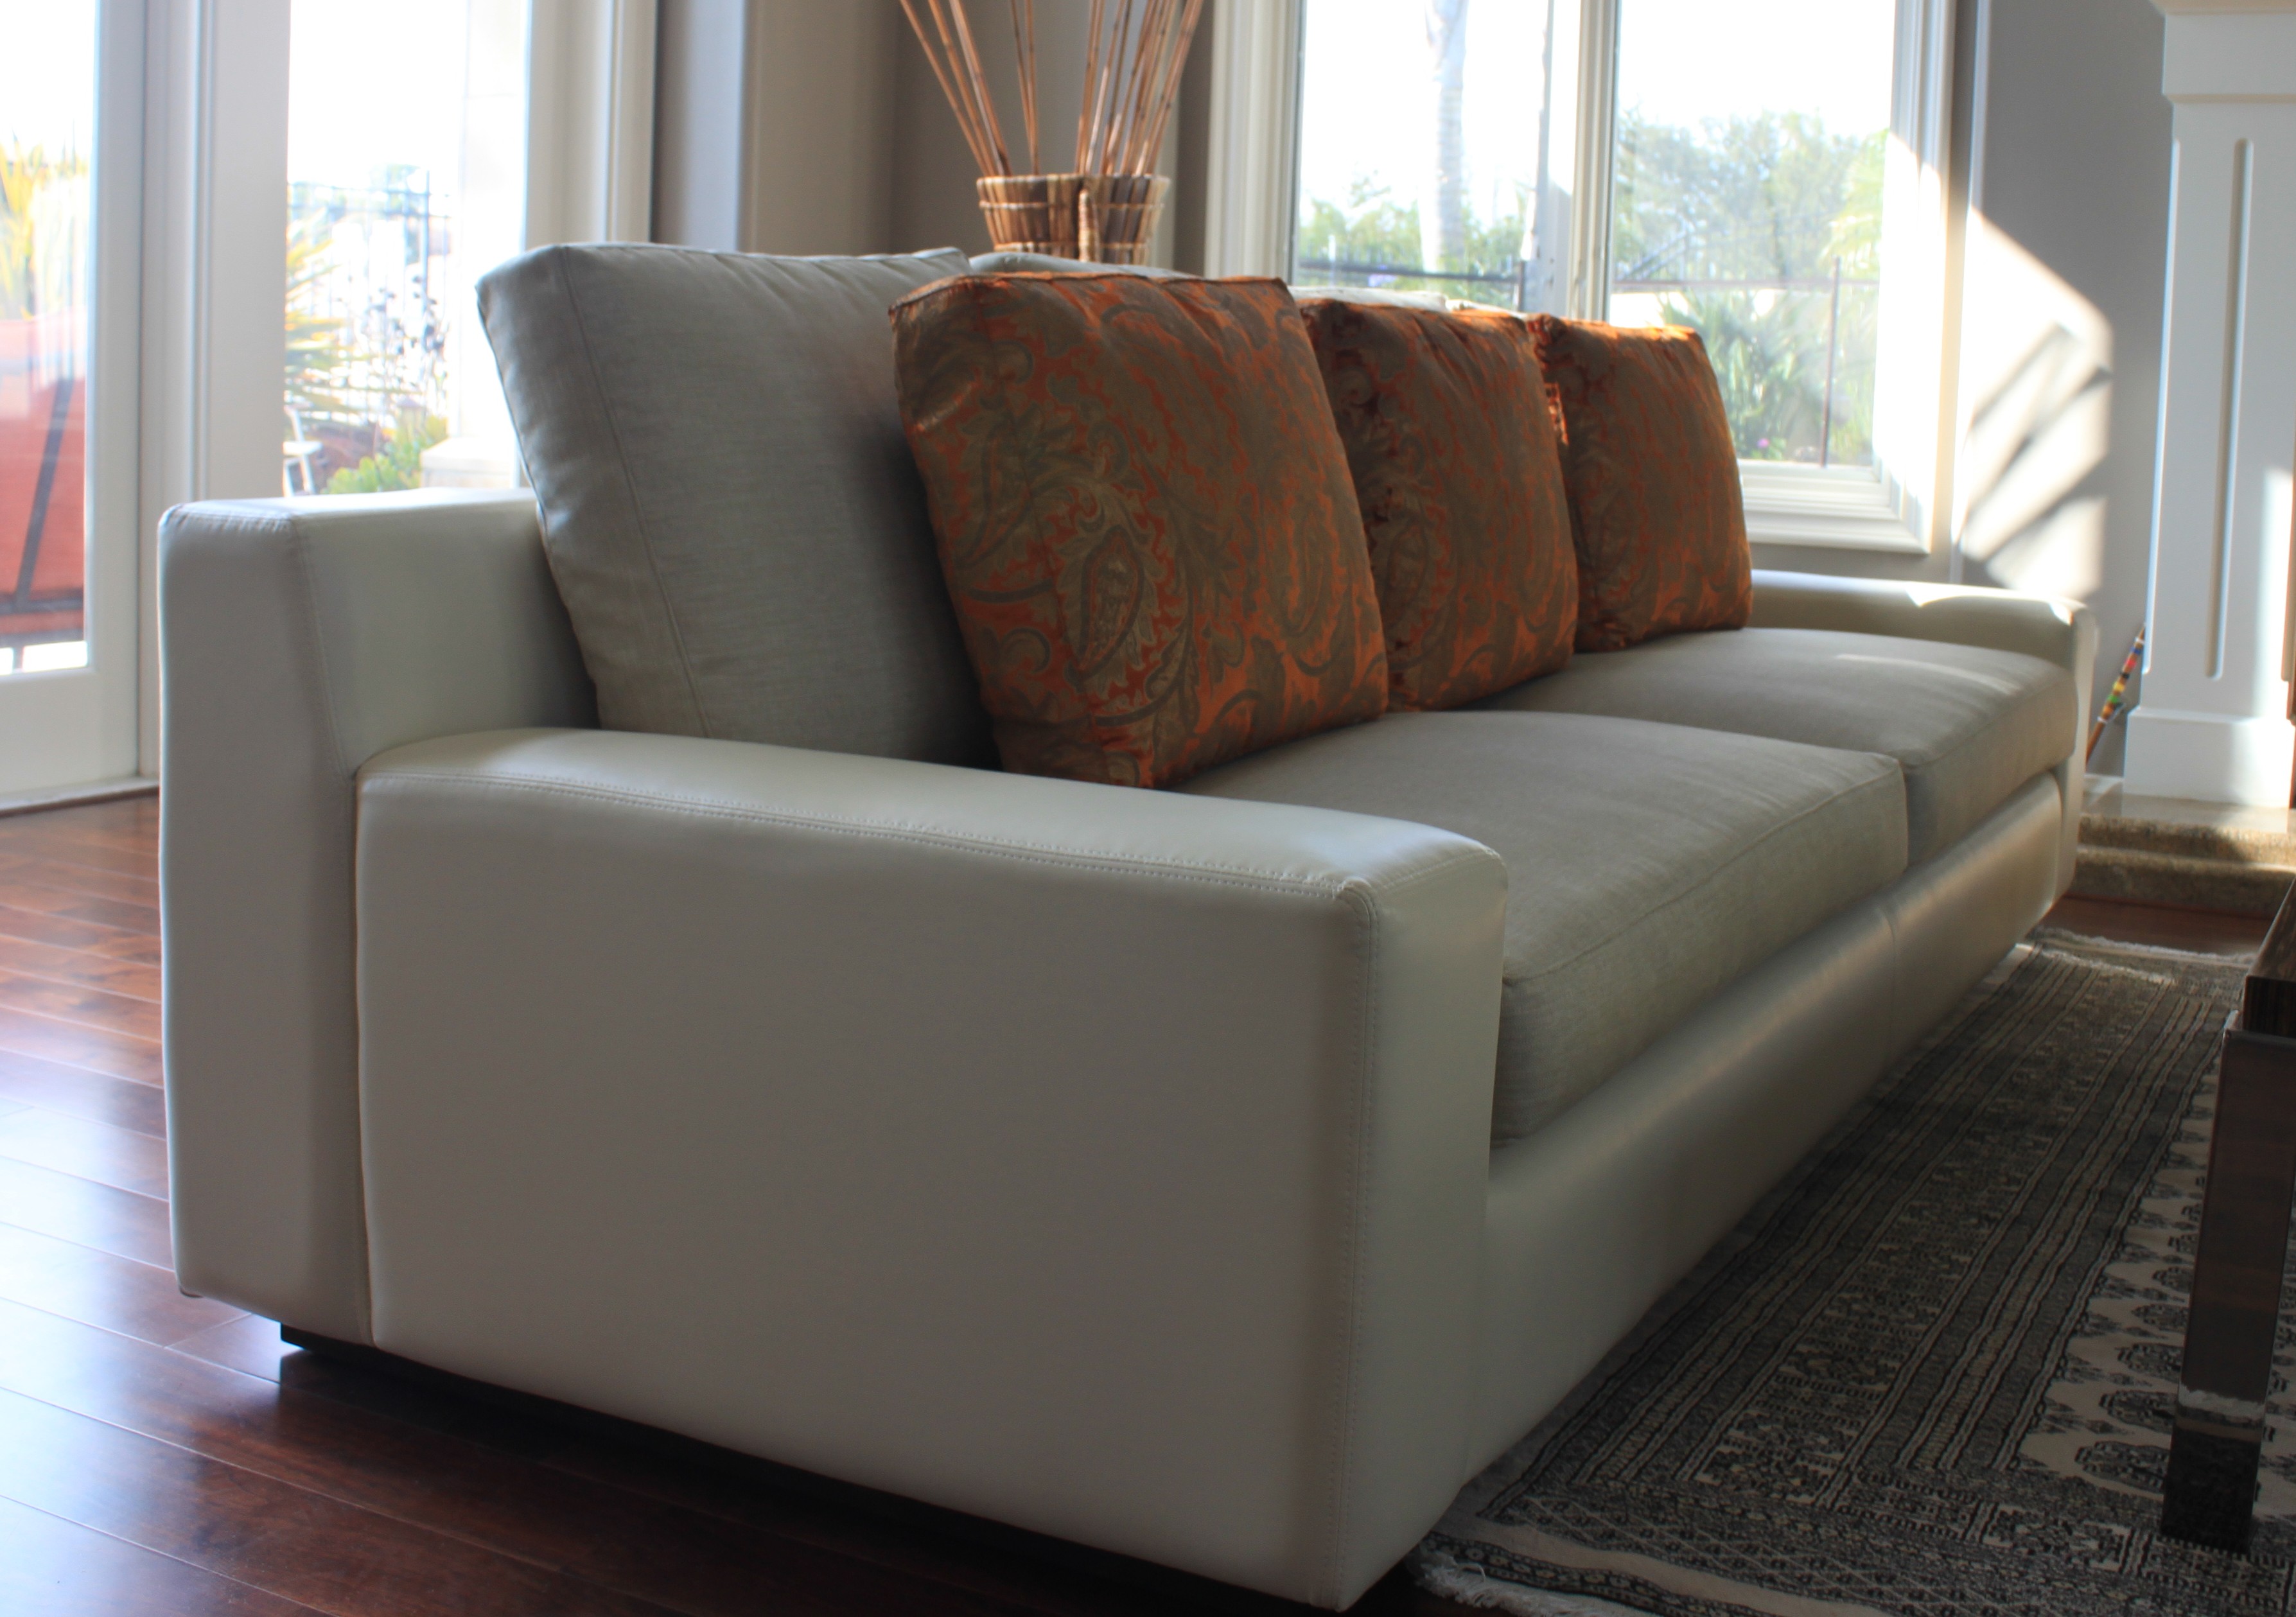 Custom sofa in vinyl body and linen cushions